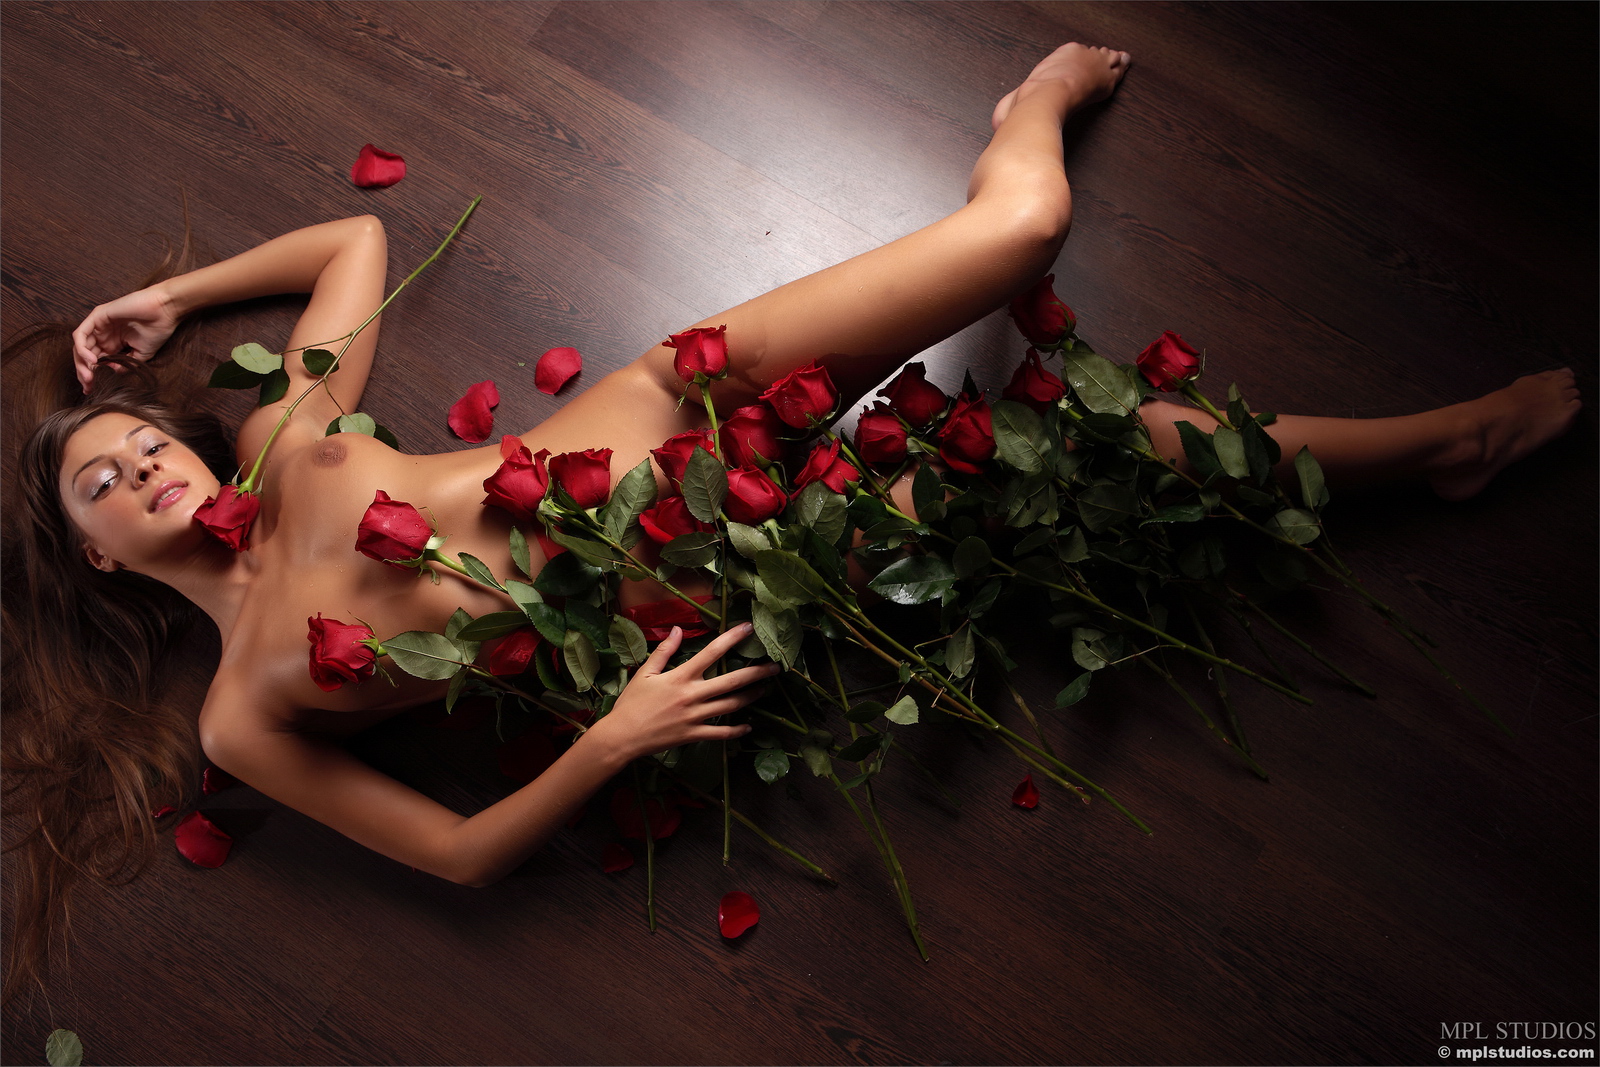 tara-naked-girl-red-roses-floor-mplstudios-09